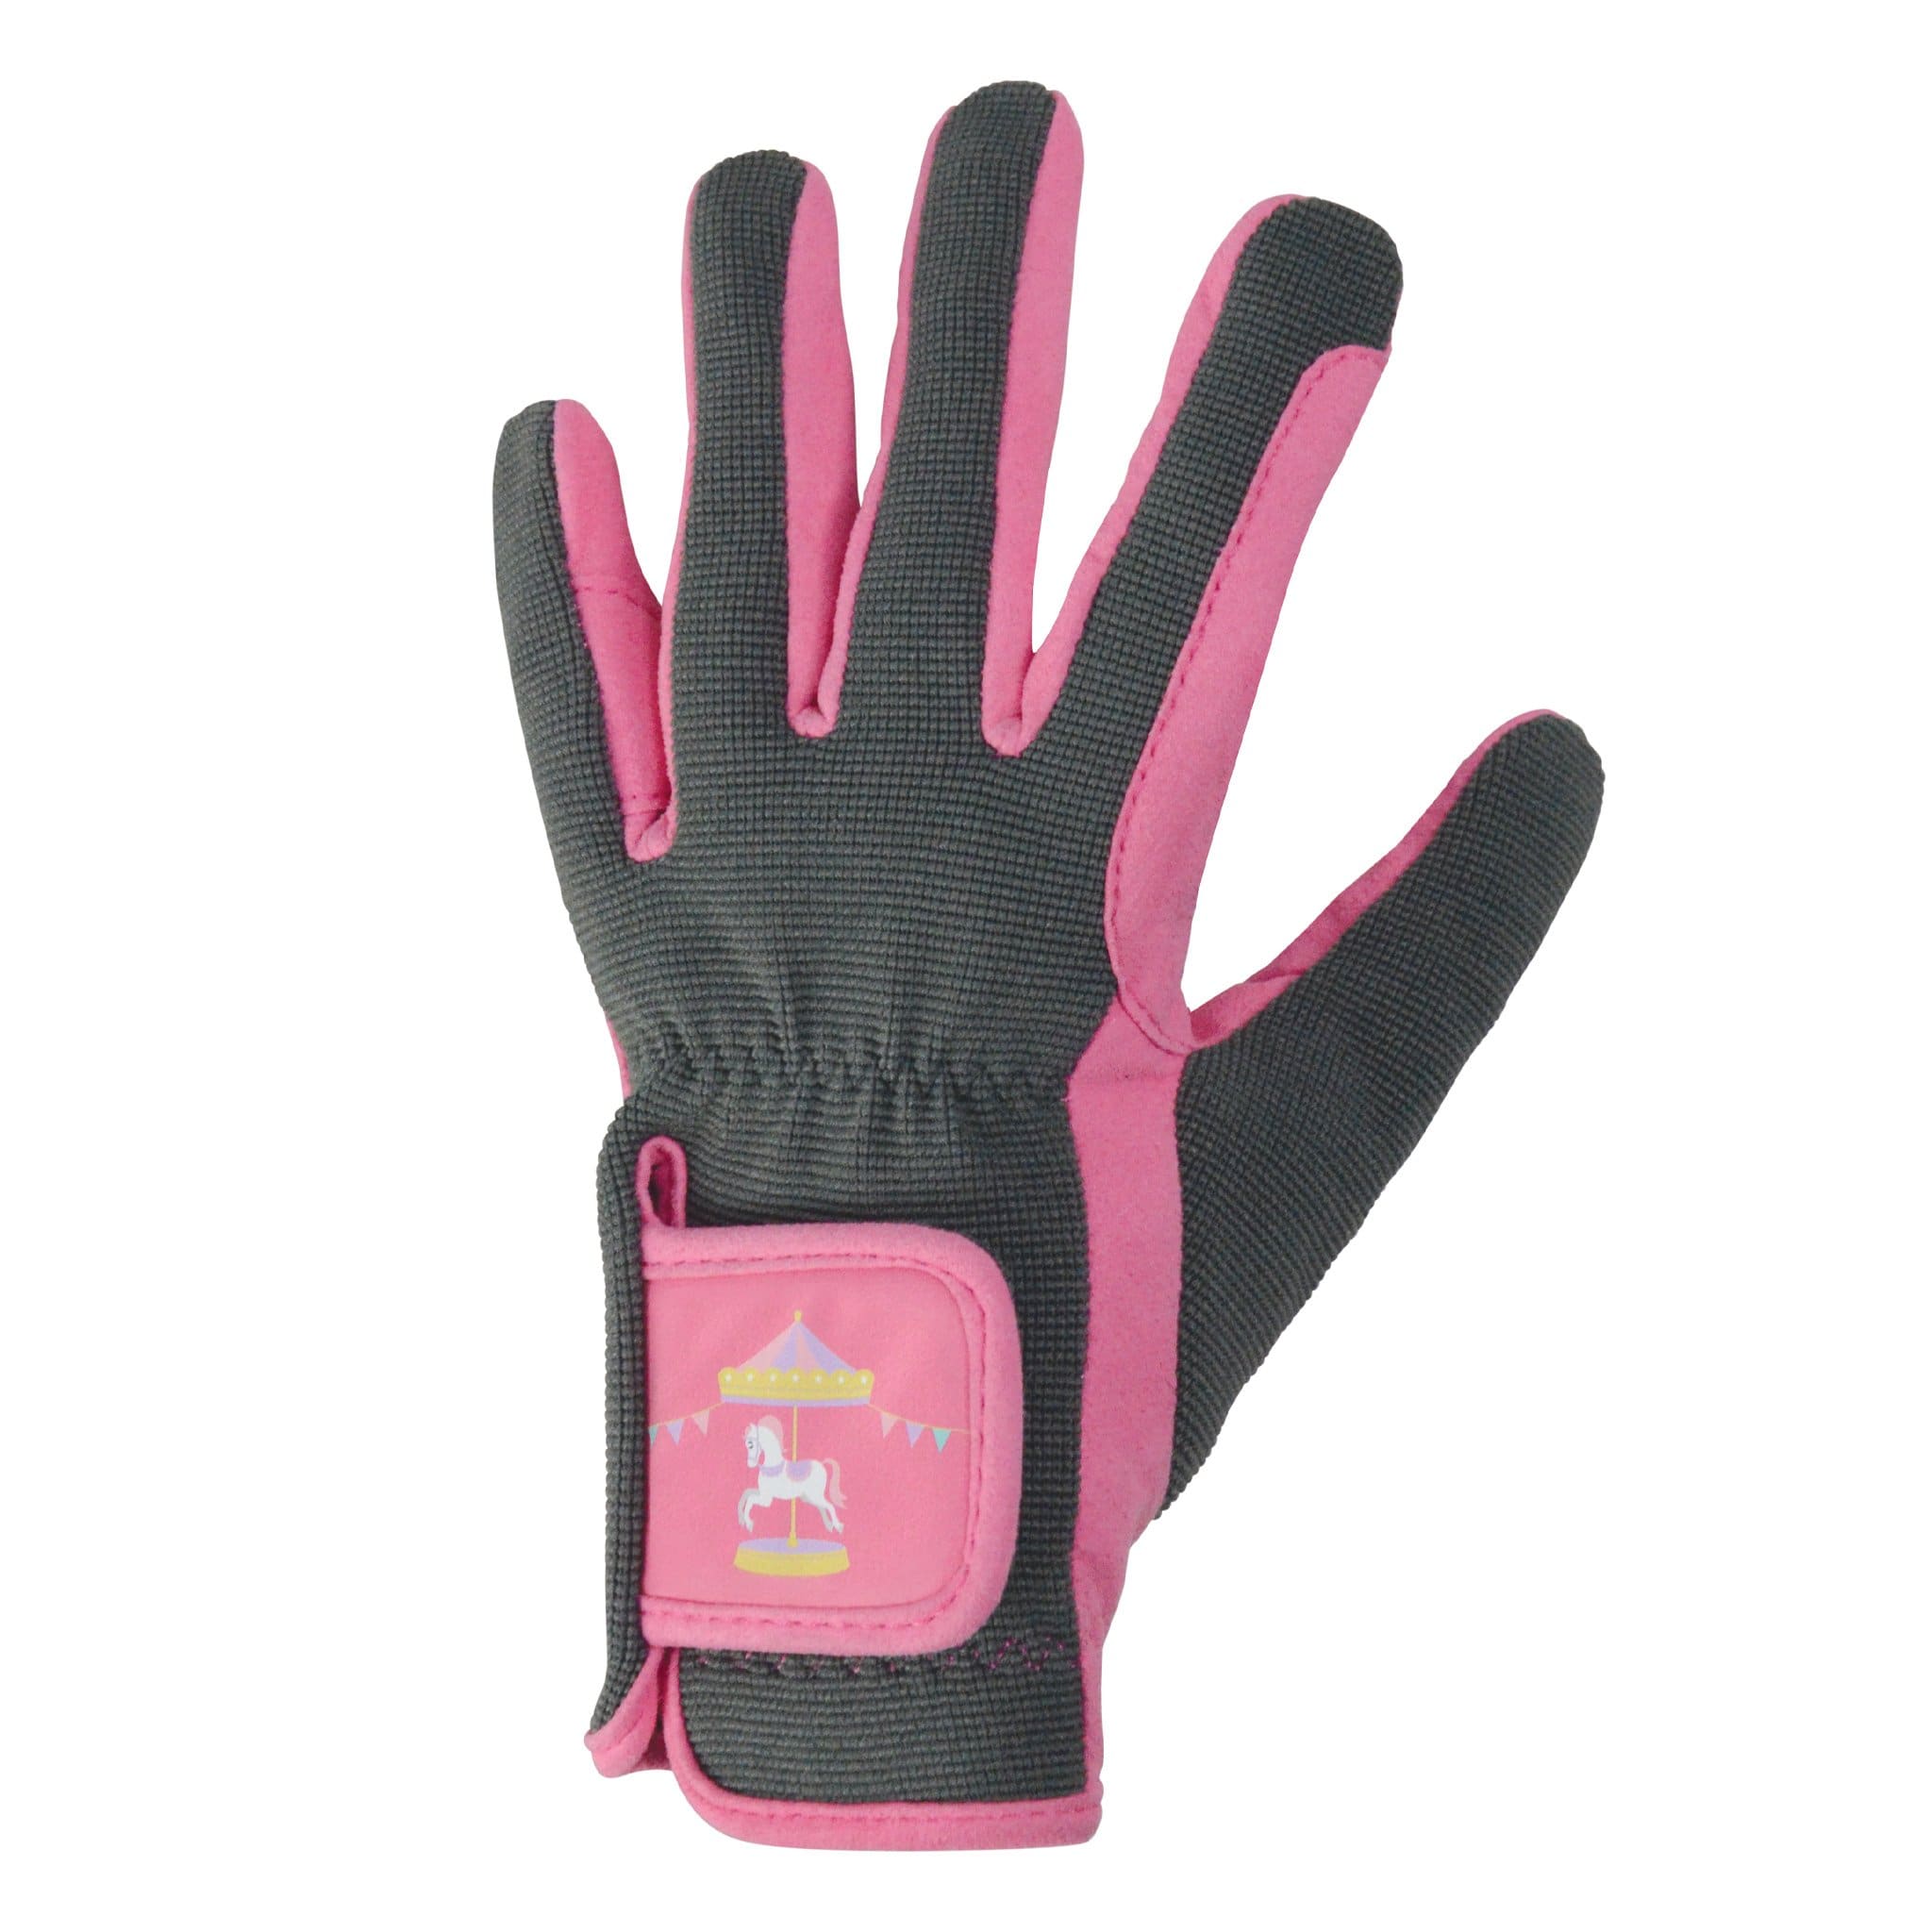 Hy Children's Little Rider Merry Go Round Riding Gloves 28512 Grey and Pink Left Glove Back Hand